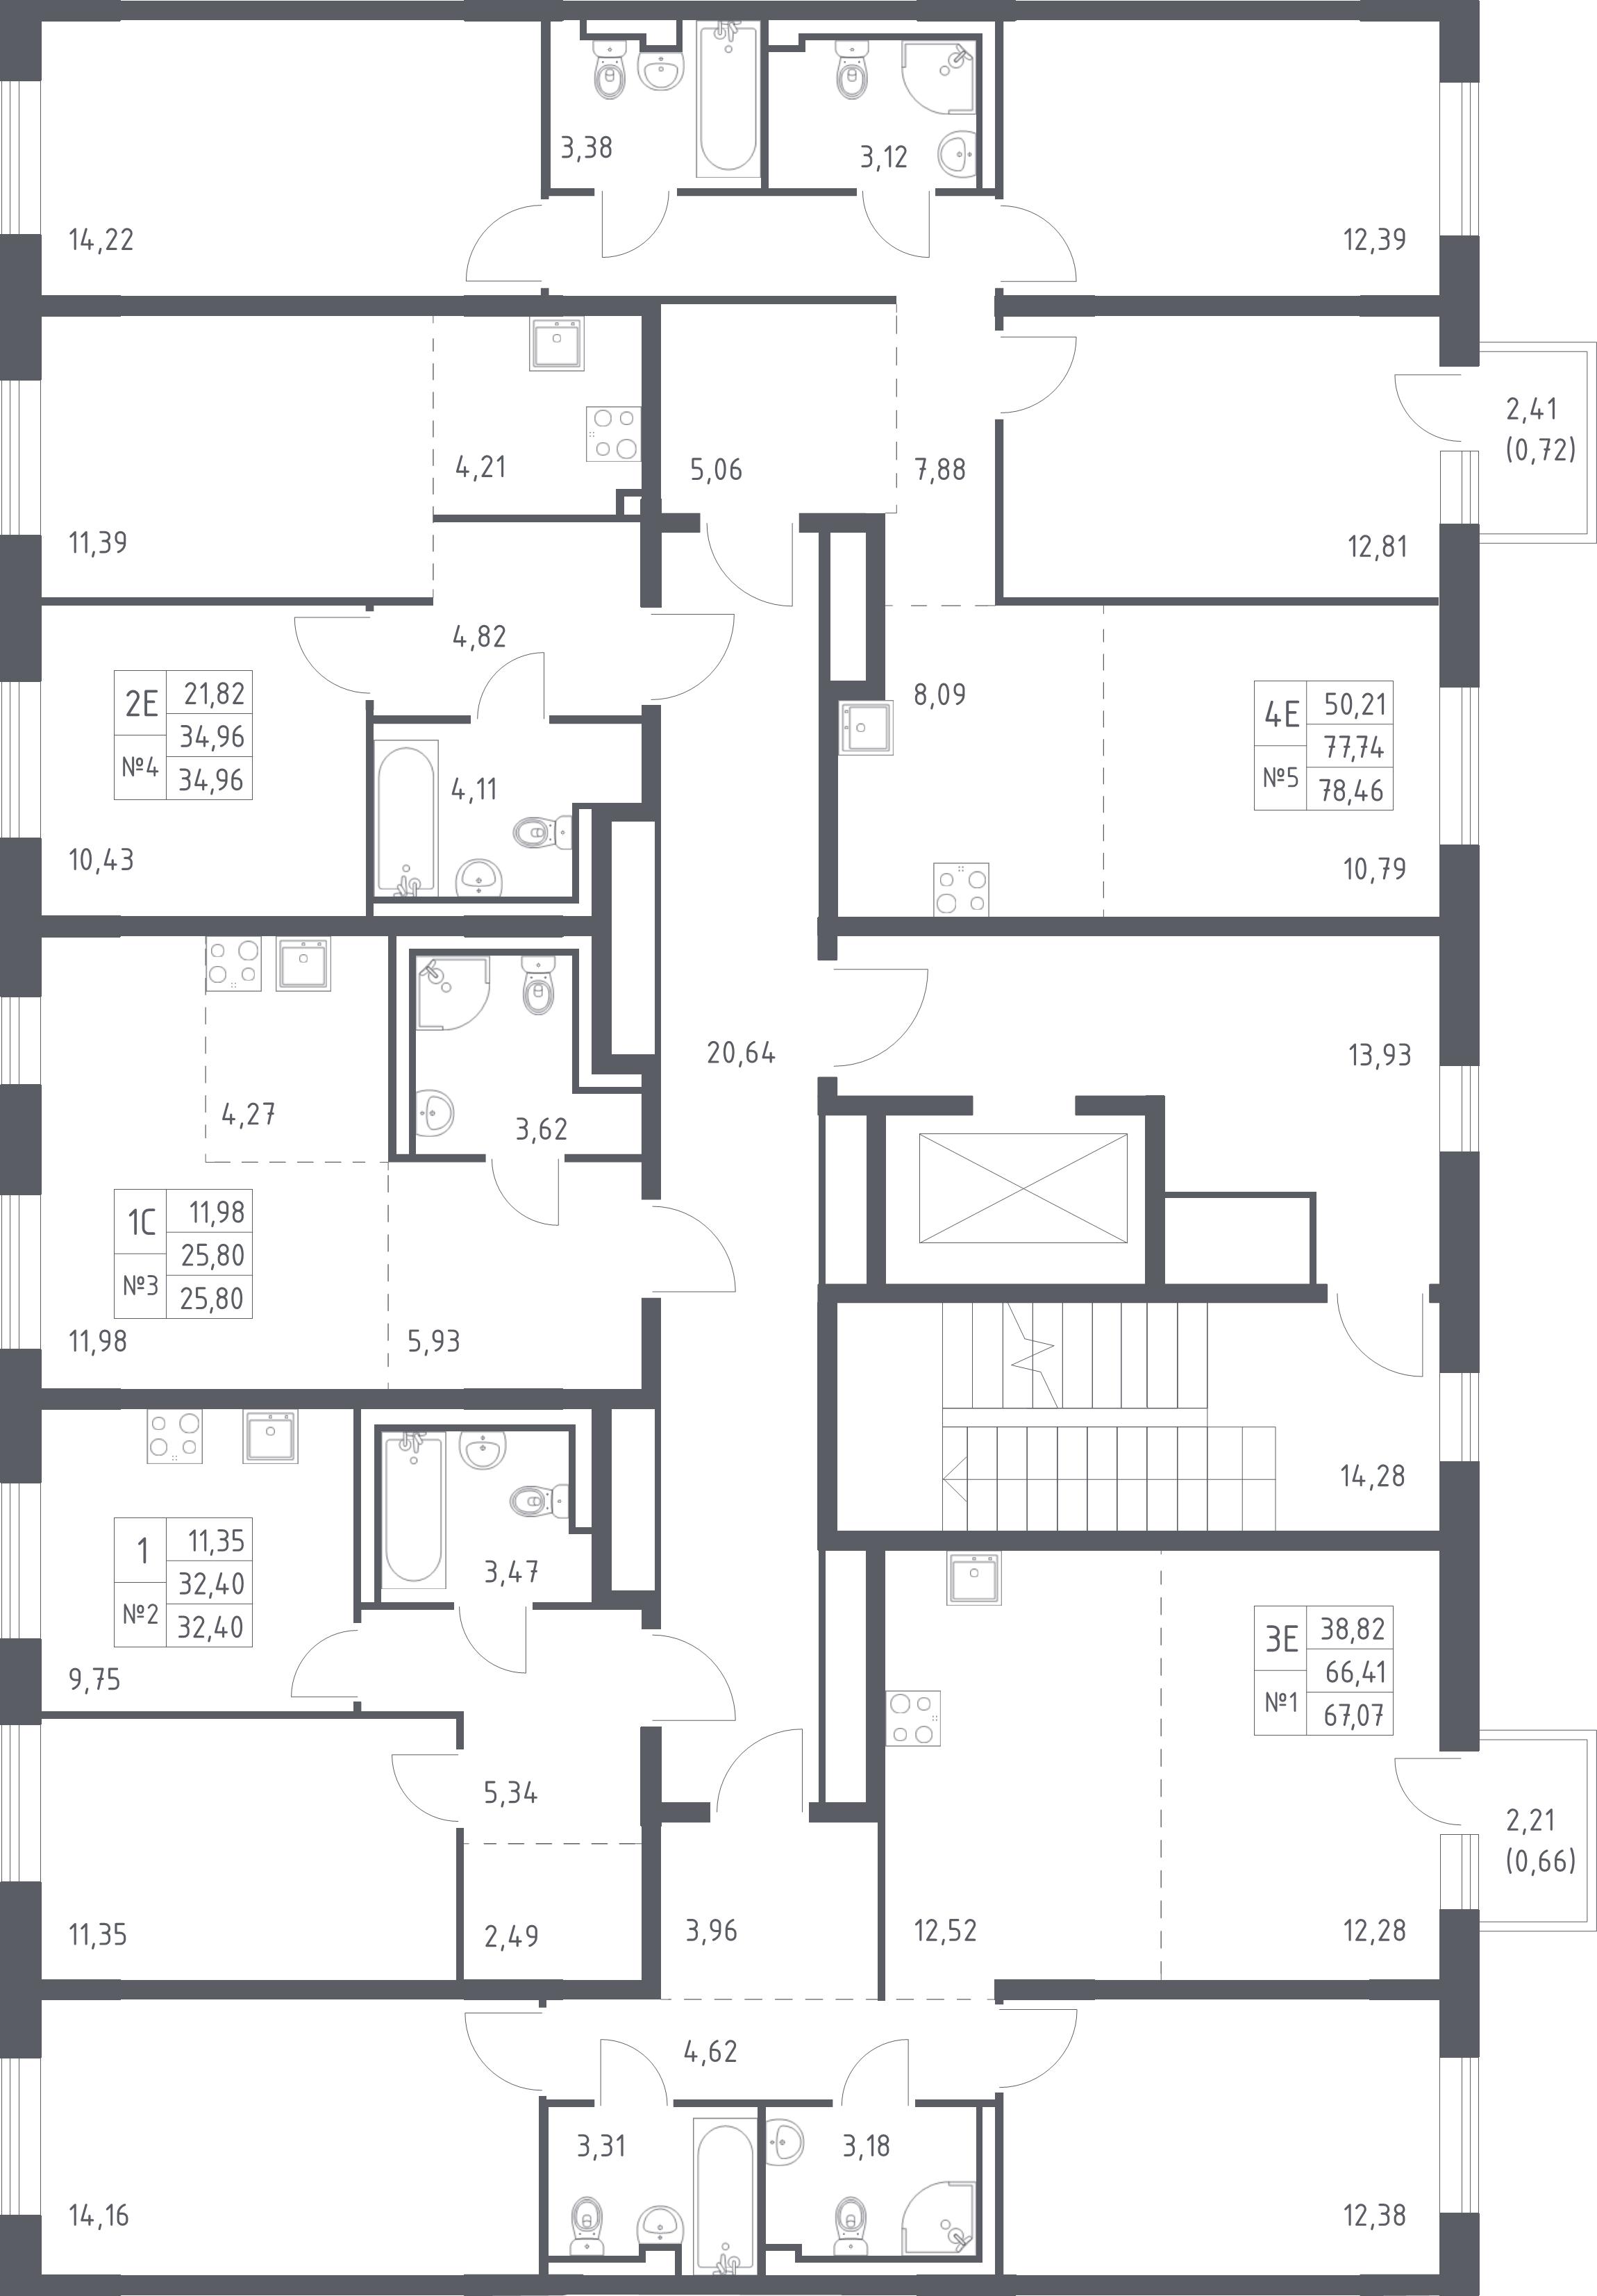 4-комнатная (Евро) квартира, 78.46 м² - планировка этажа